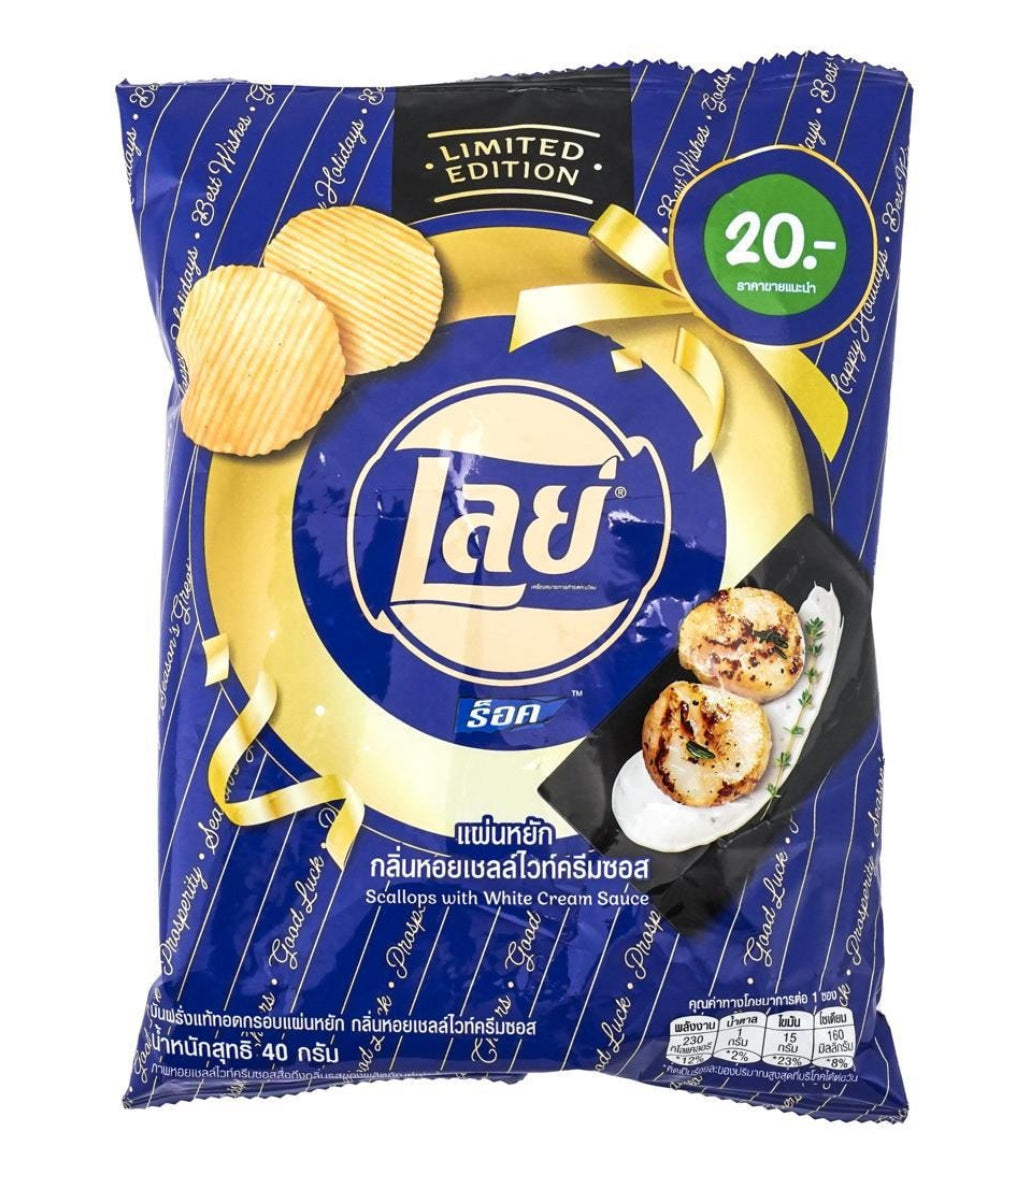 Lay's Thailand
White Sauce Scallop Flavored Potato Chips, 1.41 oz